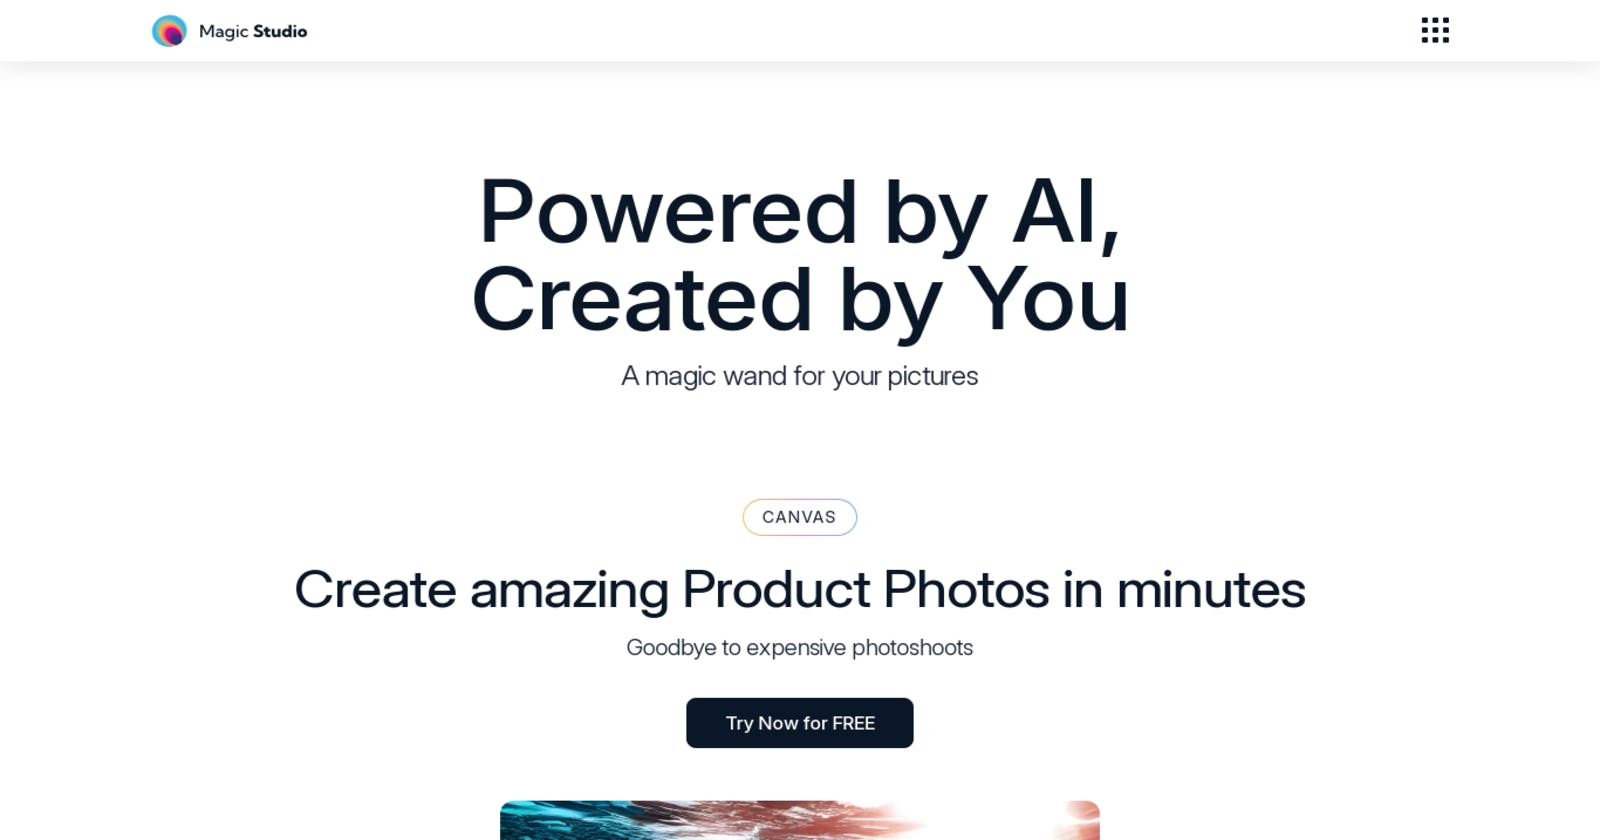 Magic Studio: Powering AI-Driven Image Creation and Editing